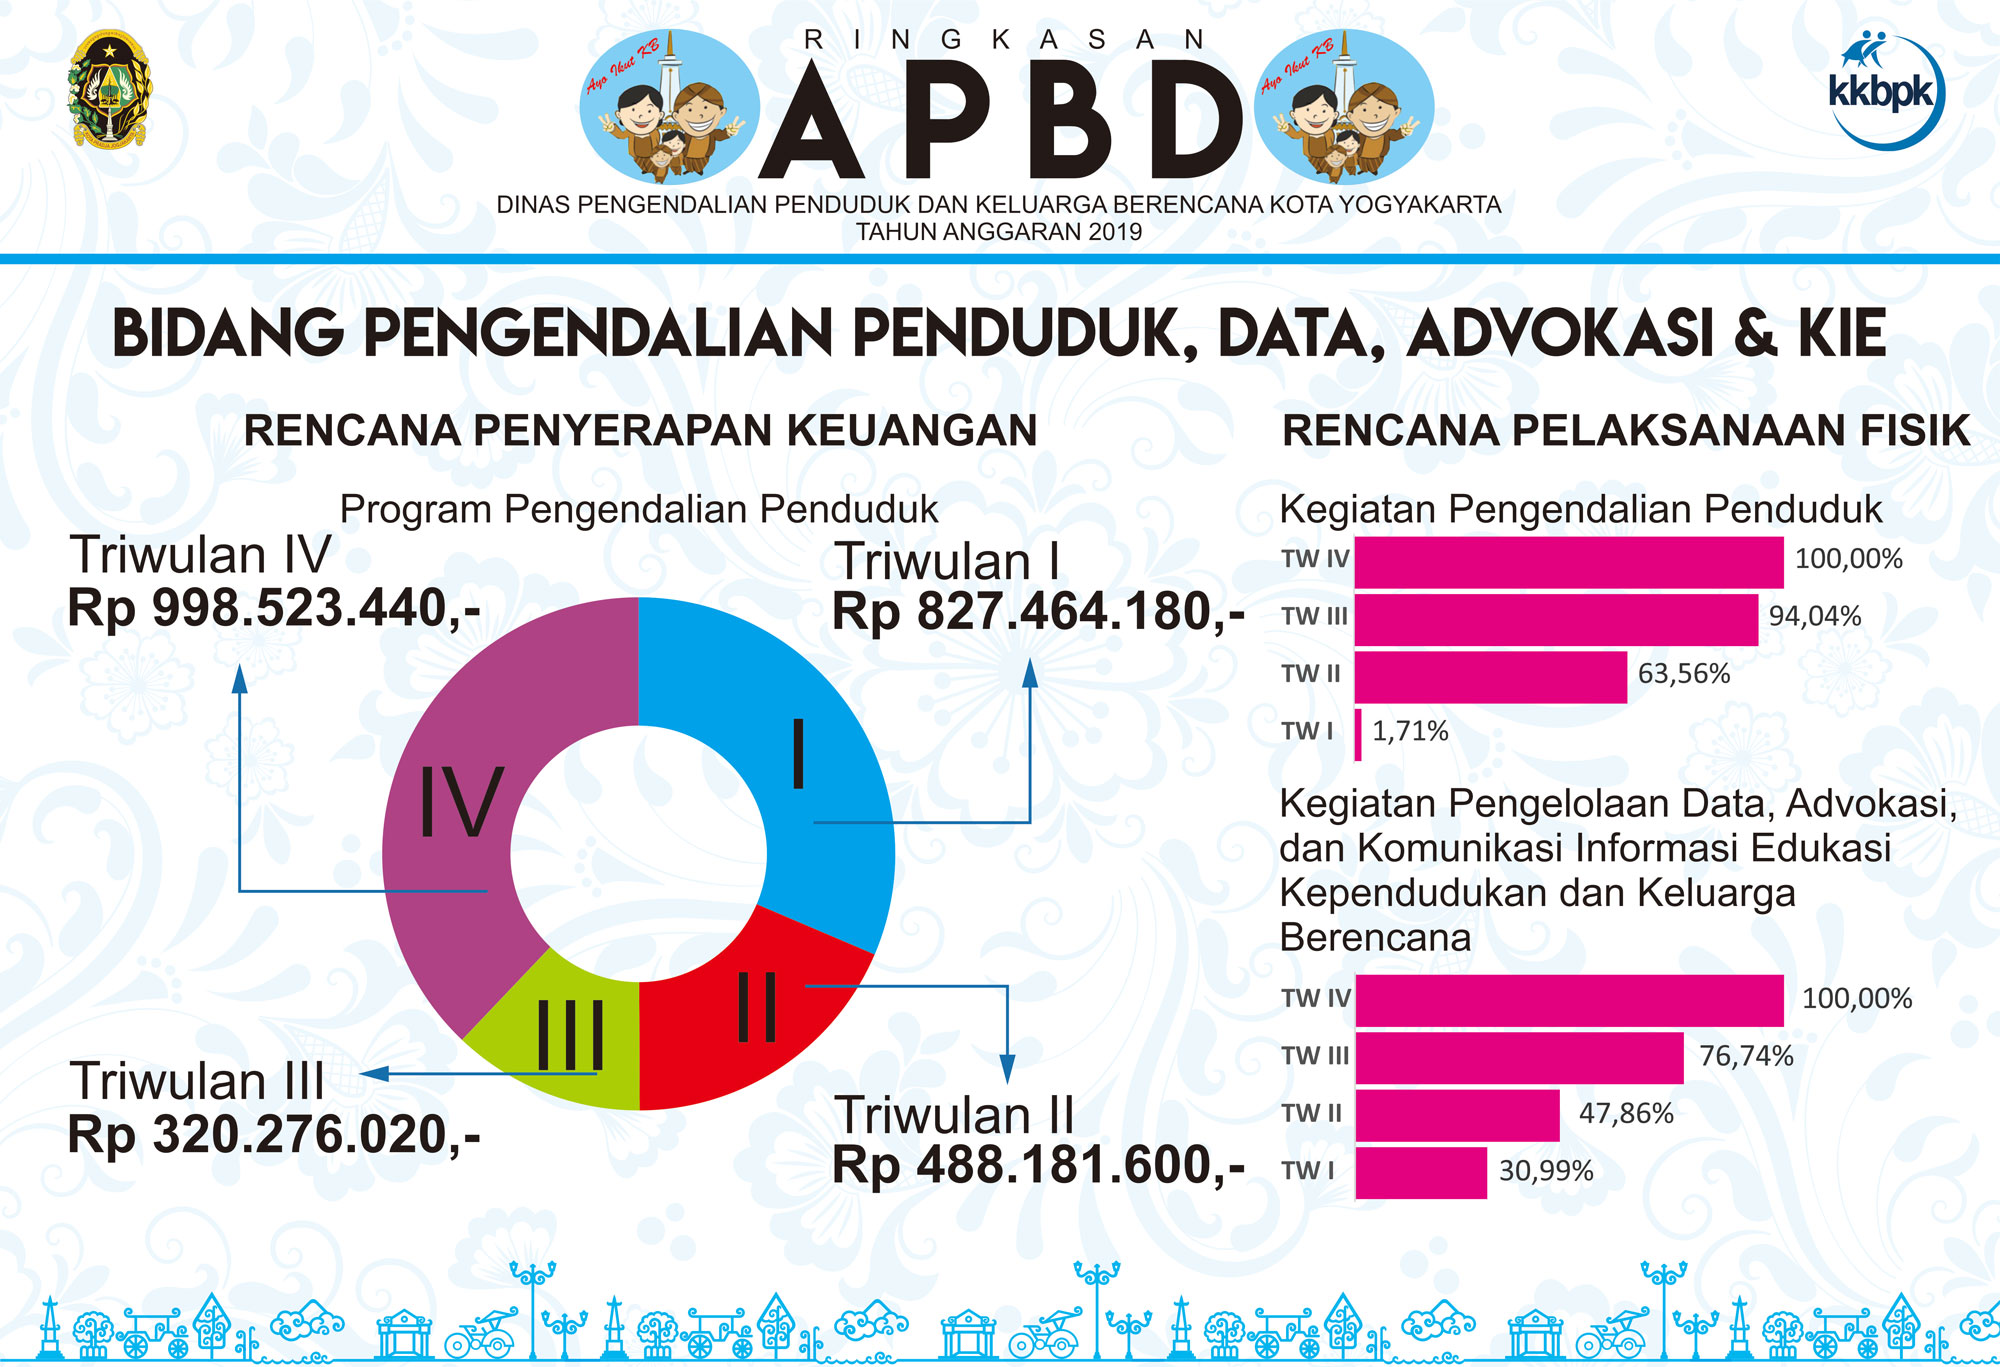 Ringkasan APBD DPPKB Kota Yogyakarta - PPDAK